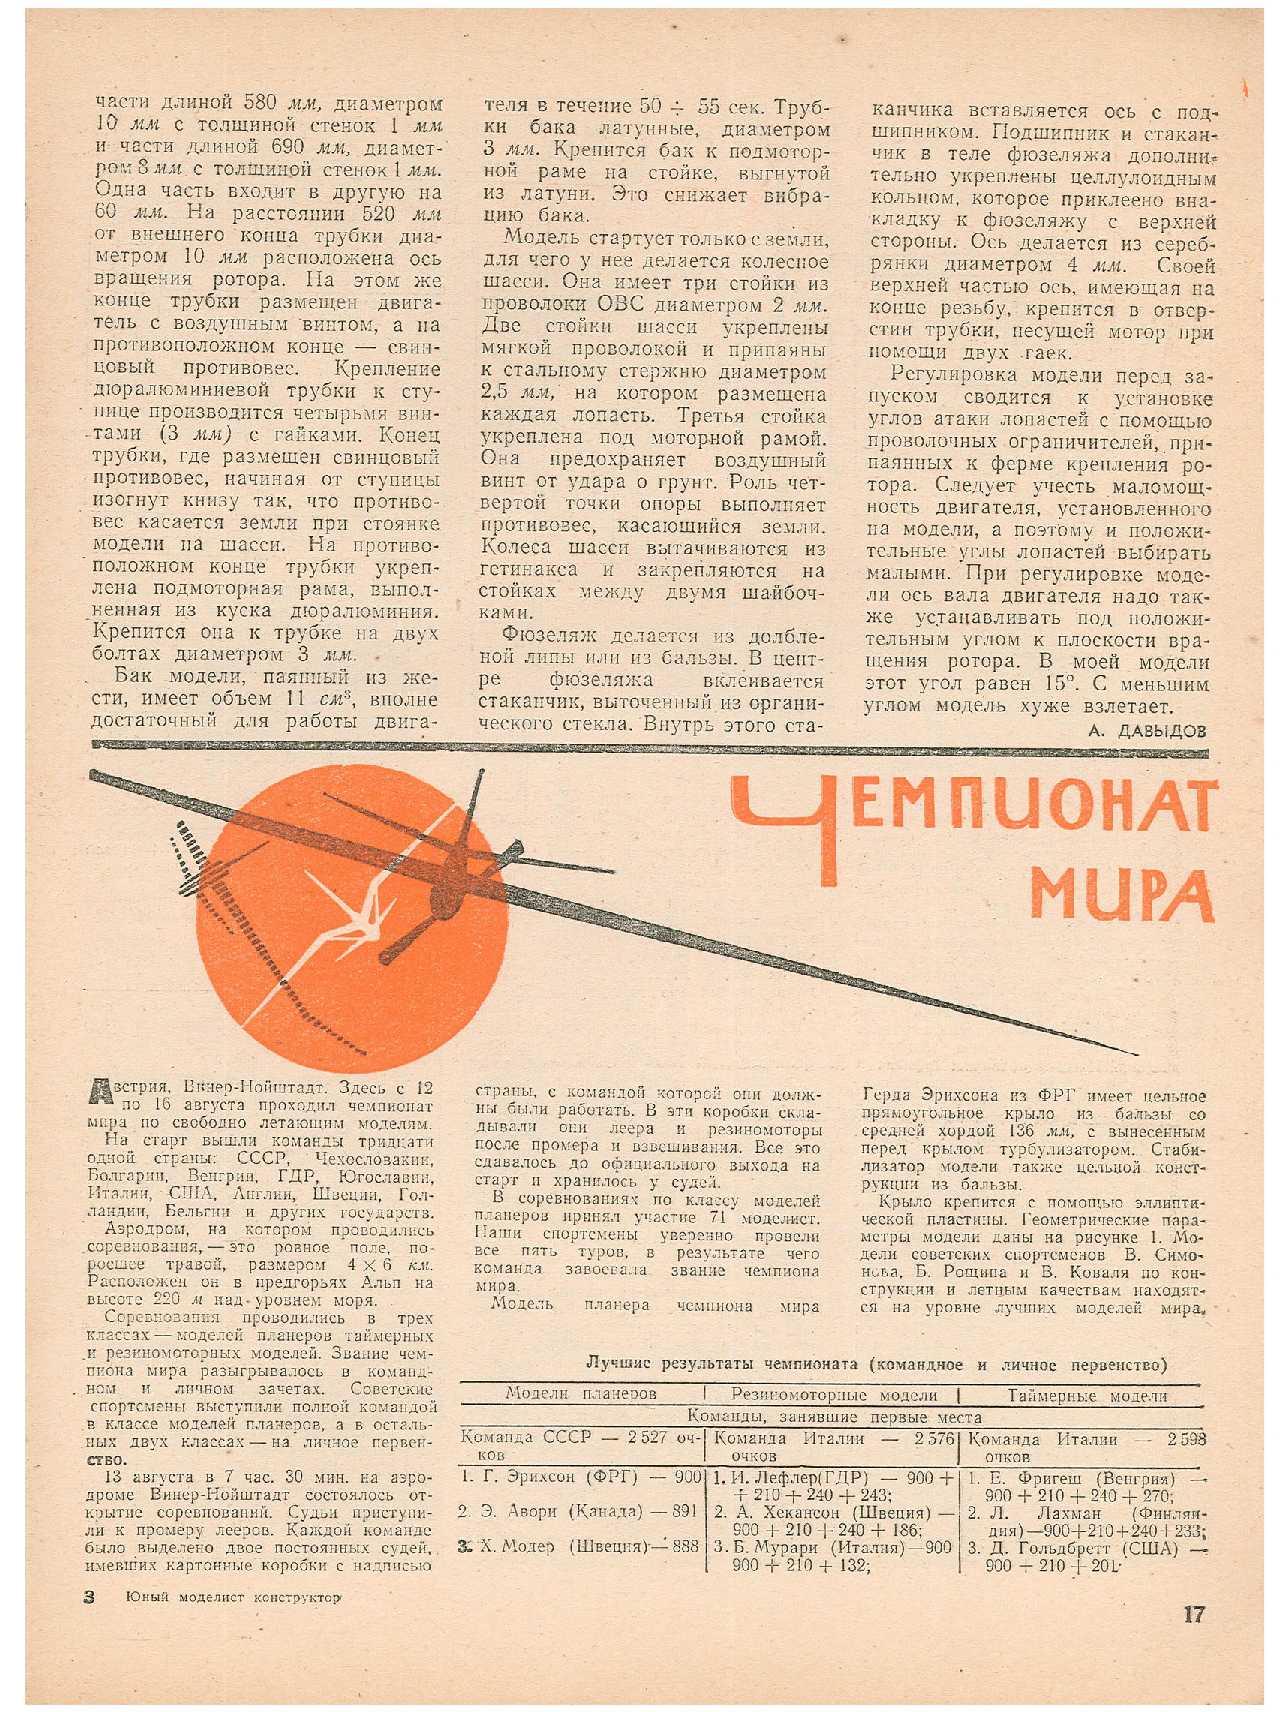 ЮМК 7, 1964, 17 c.